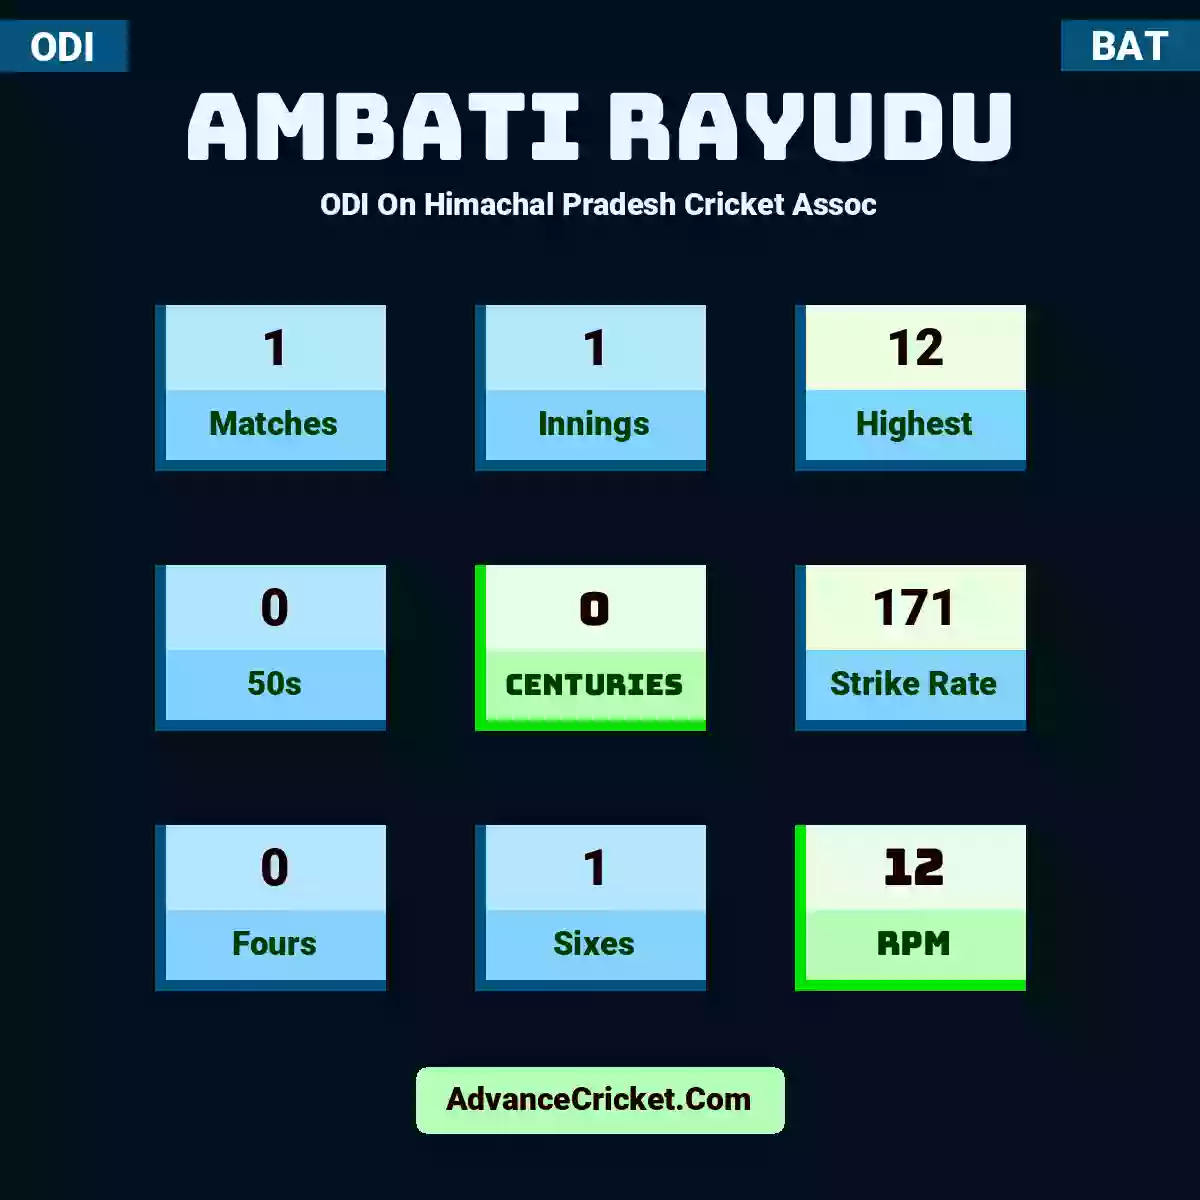 Ambati Rayudu ODI  On Himachal Pradesh Cricket Assoc, Ambati Rayudu played 1 matches, scored 12 runs as highest, 0 half-centuries, and 0 centuries, with a strike rate of 171. A.Rayudu hit 0 fours and 1 sixes, with an RPM of 12.